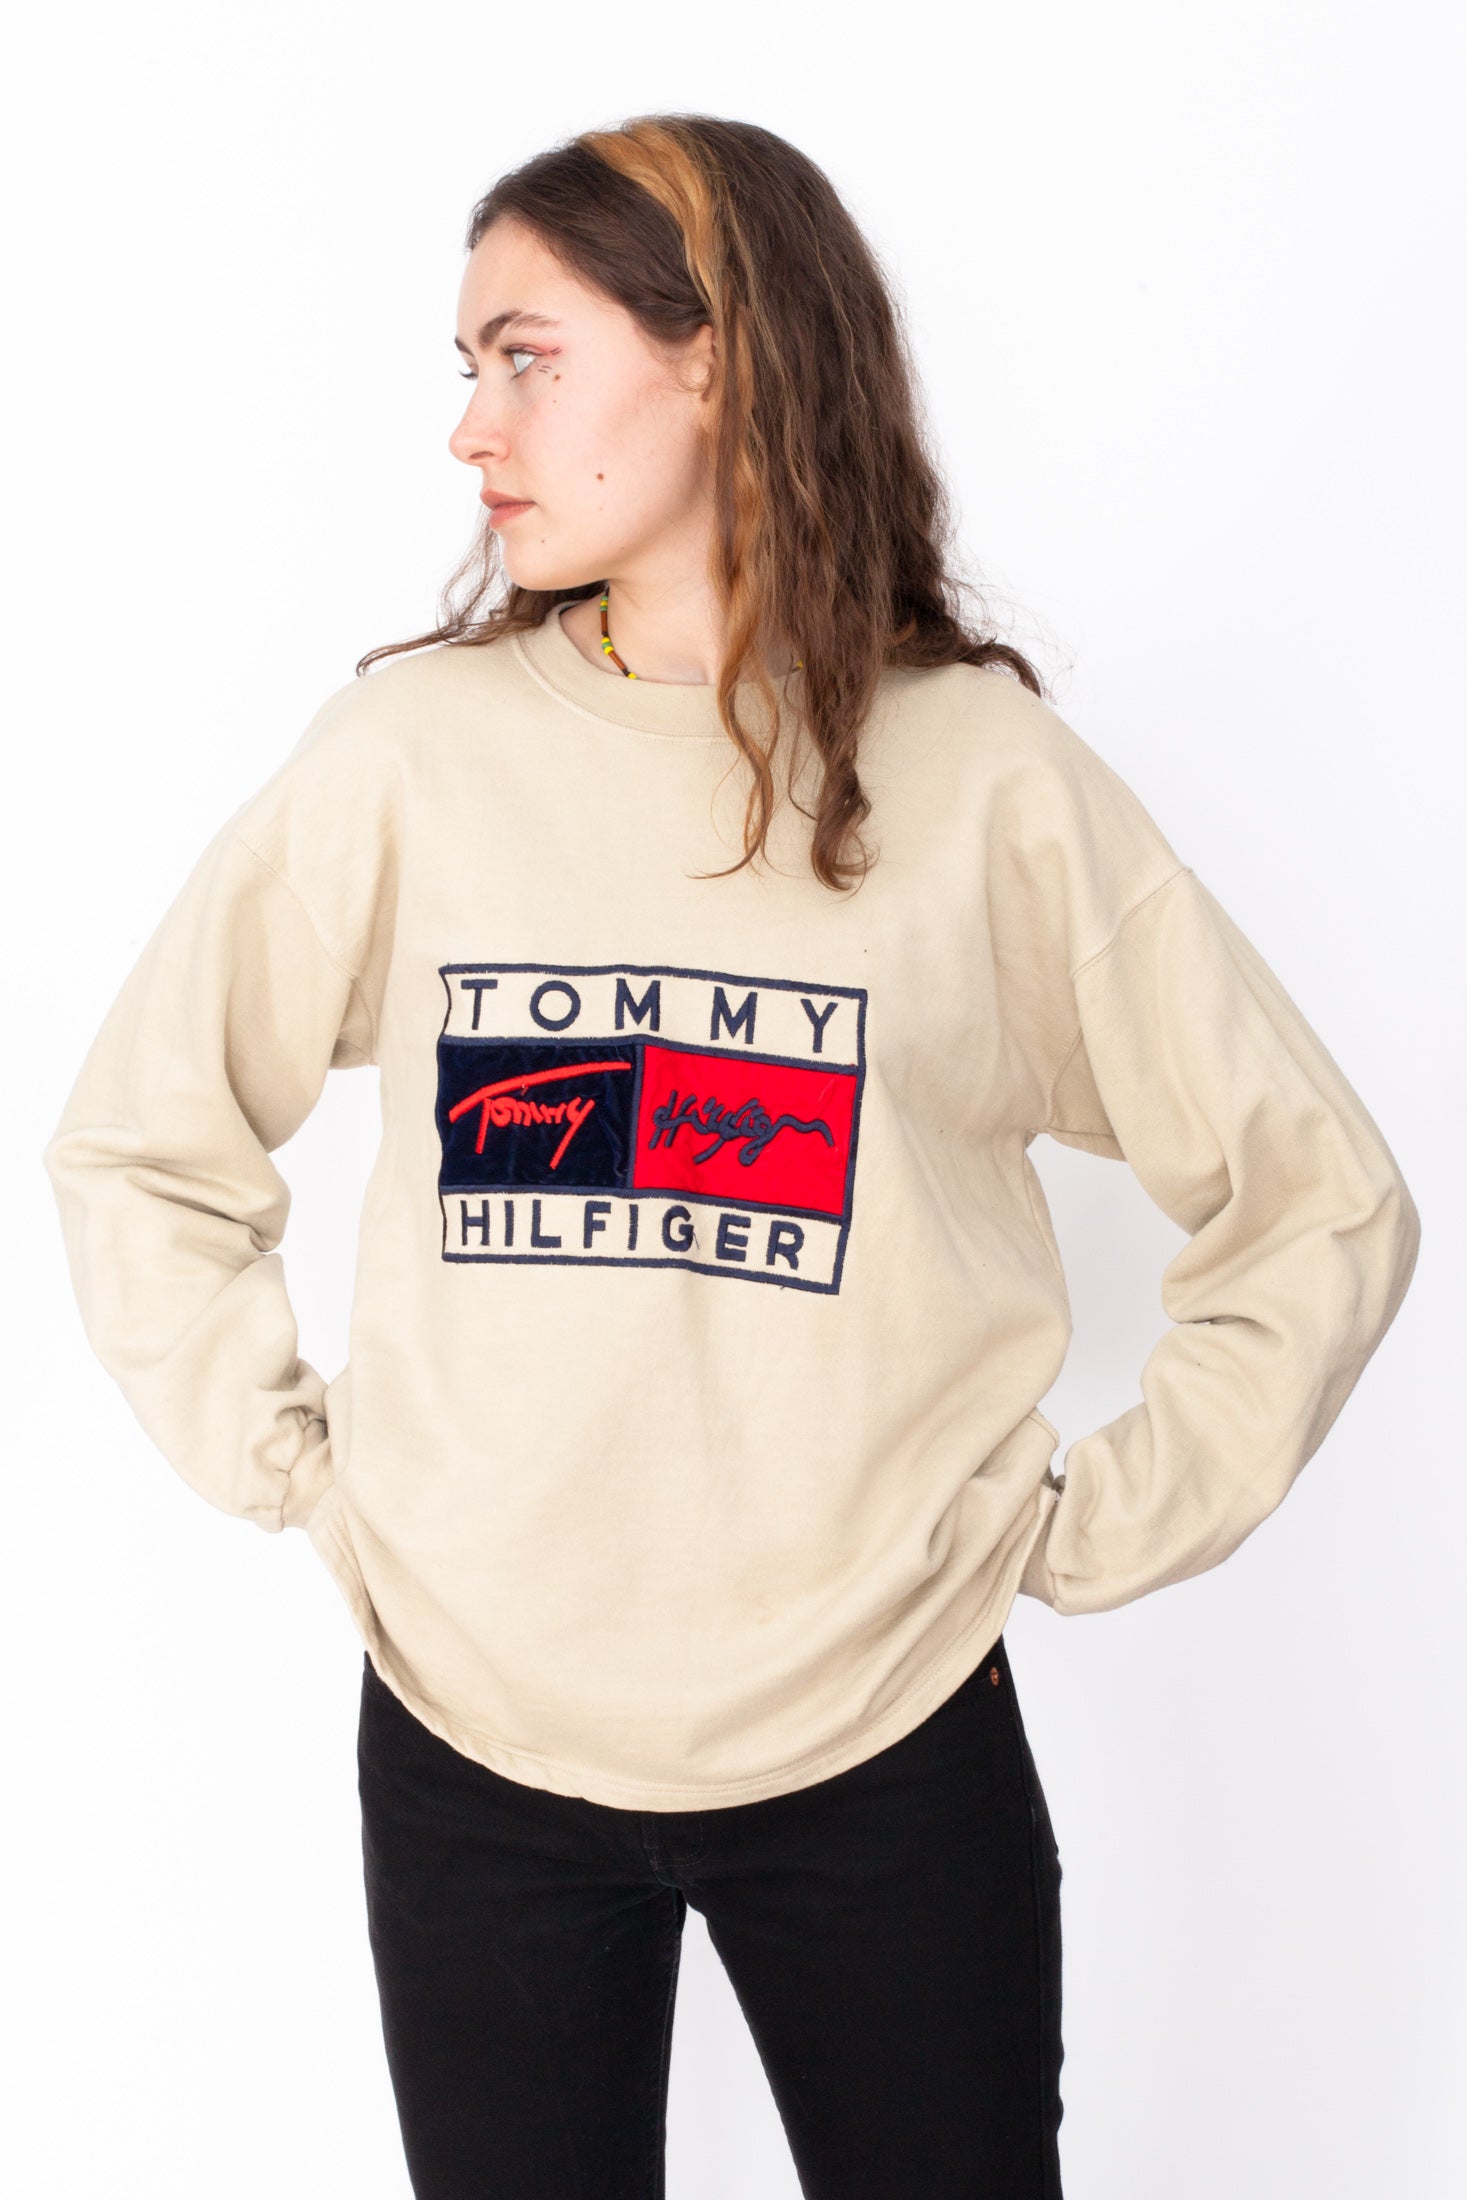 RARE Vintage 90s Tommy Hilfiger Not Sweatshirt Sweet Logo – Too Big